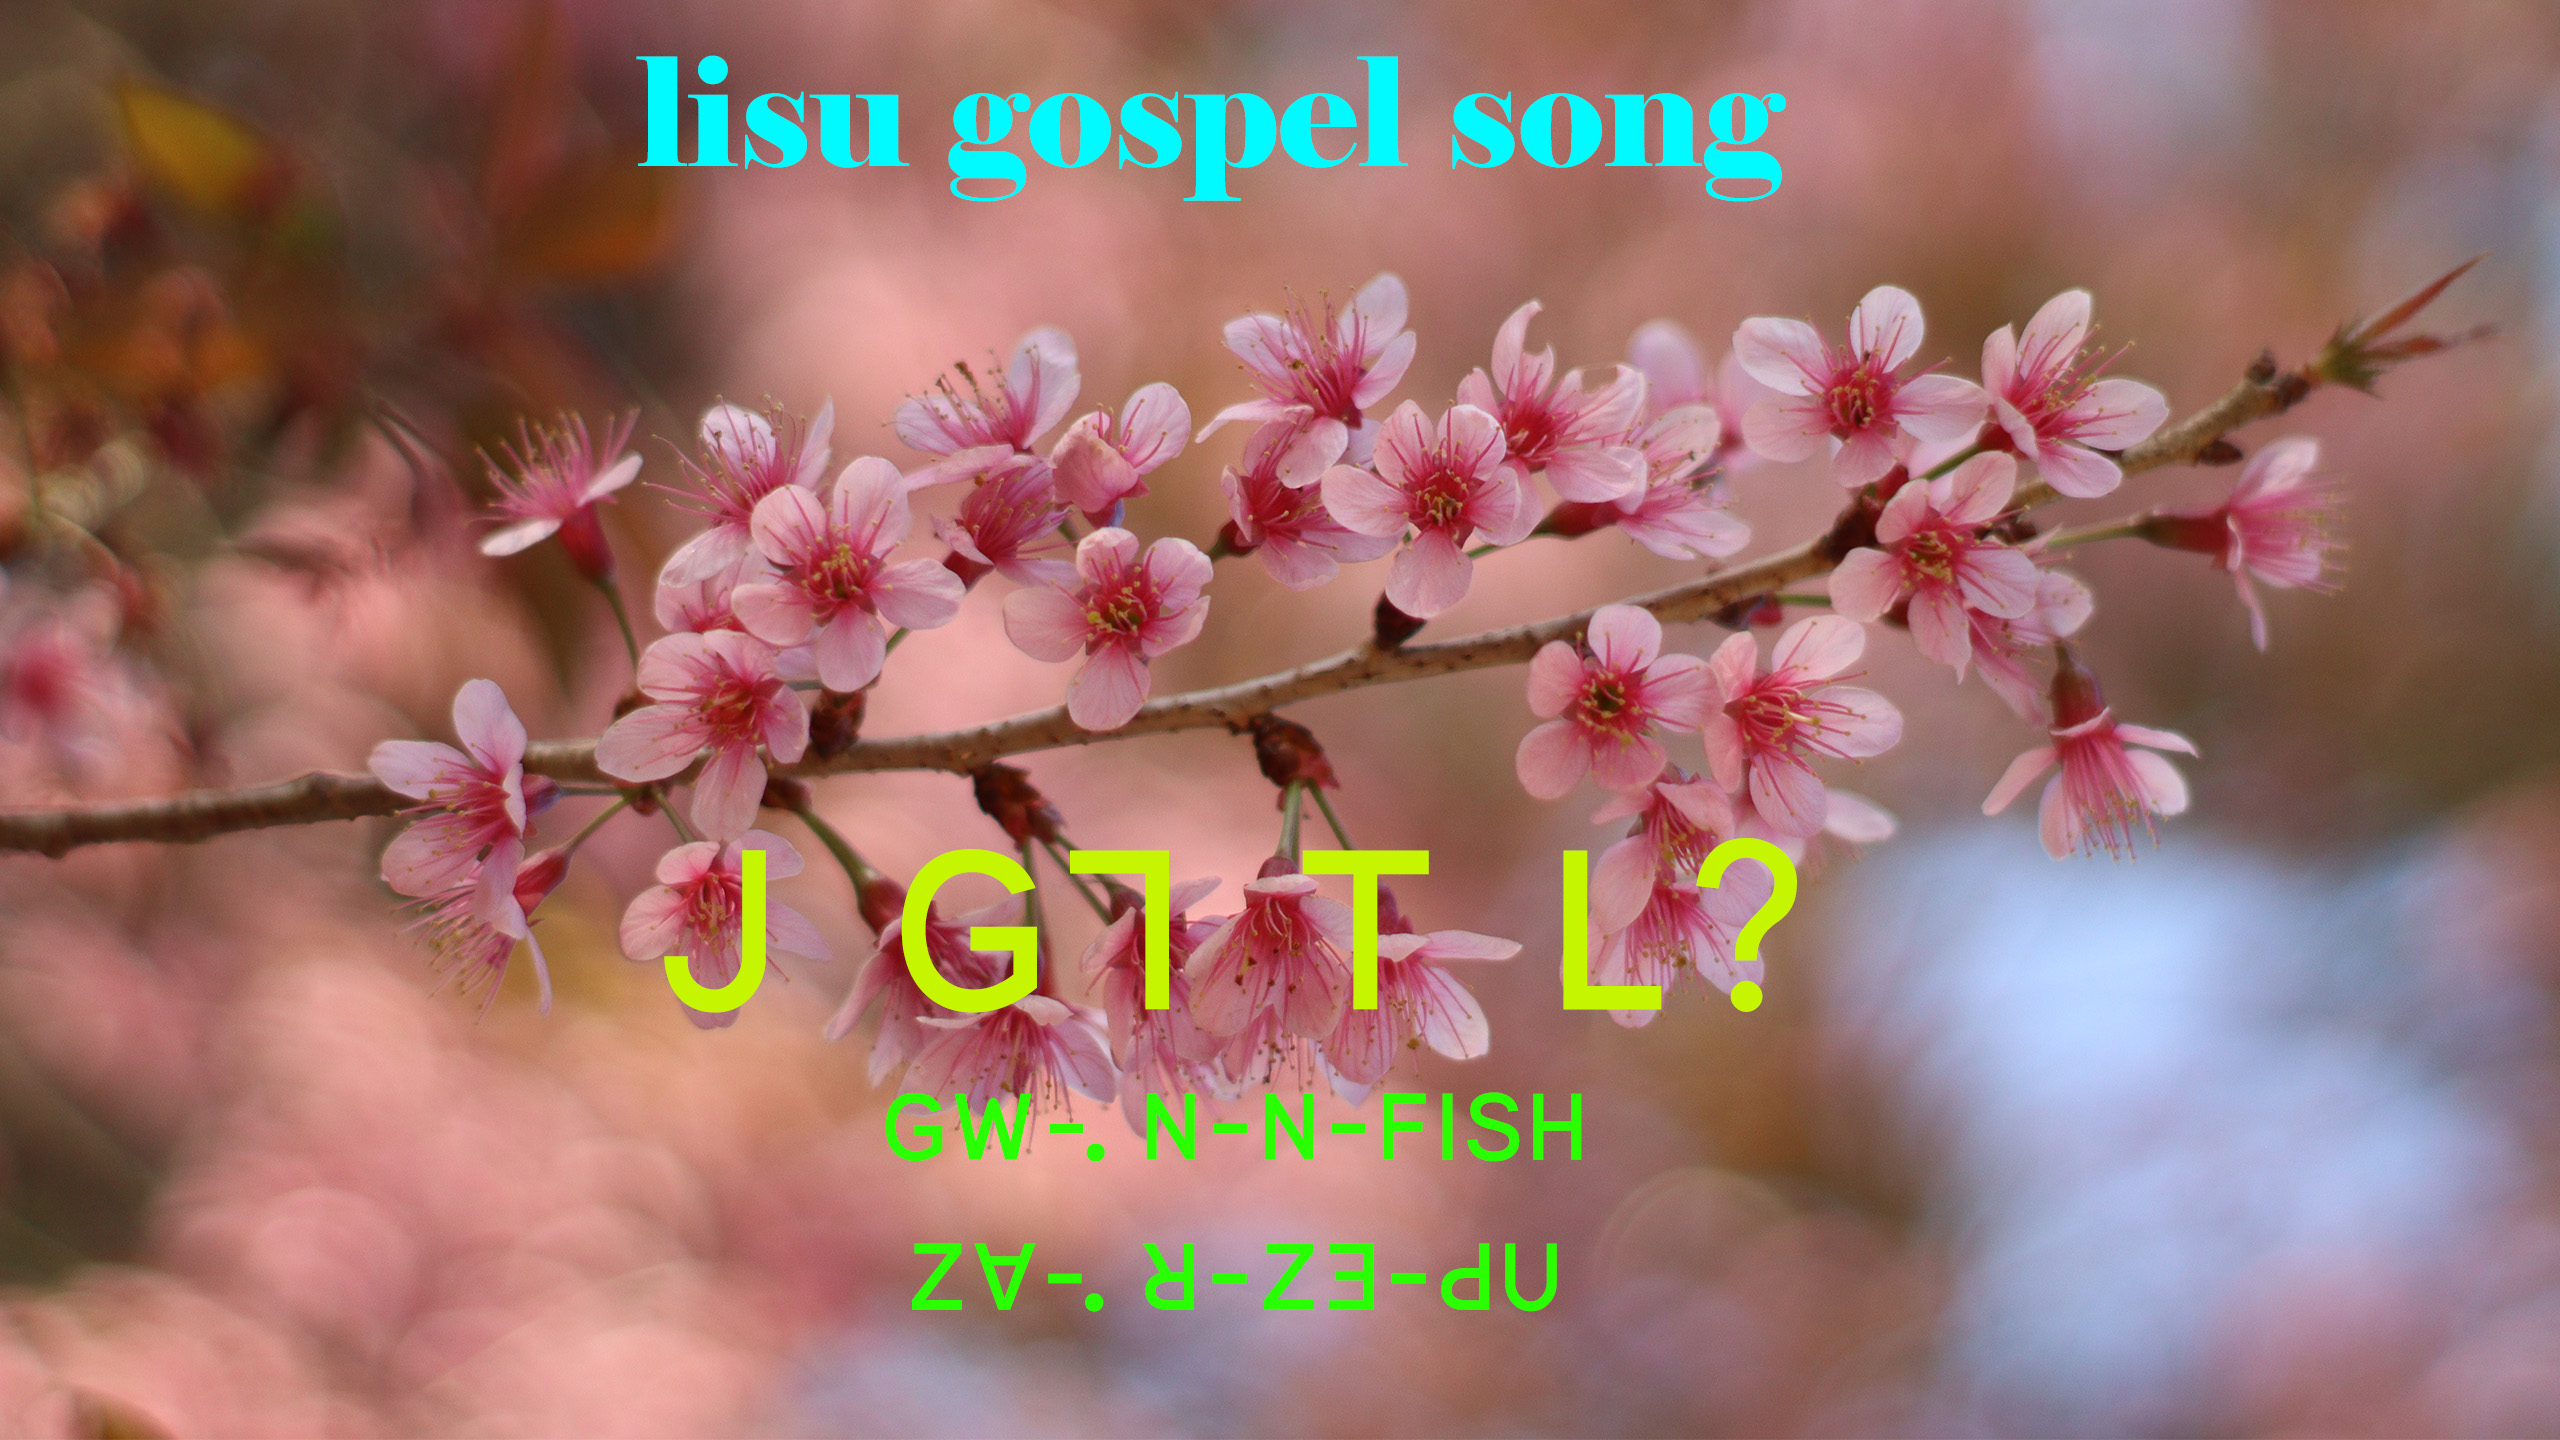 lisu gospel song ꓙ ꓖꓶꓽ ꓔ ꓡ?= ꓖꓪ꓾ ꓠ‐ꓠ‐ꓝꓲꓢꓧ ꓜꓯ꓾ ꓤ‐ꓜꓱ‐ꓒꓴ lisu gospel song